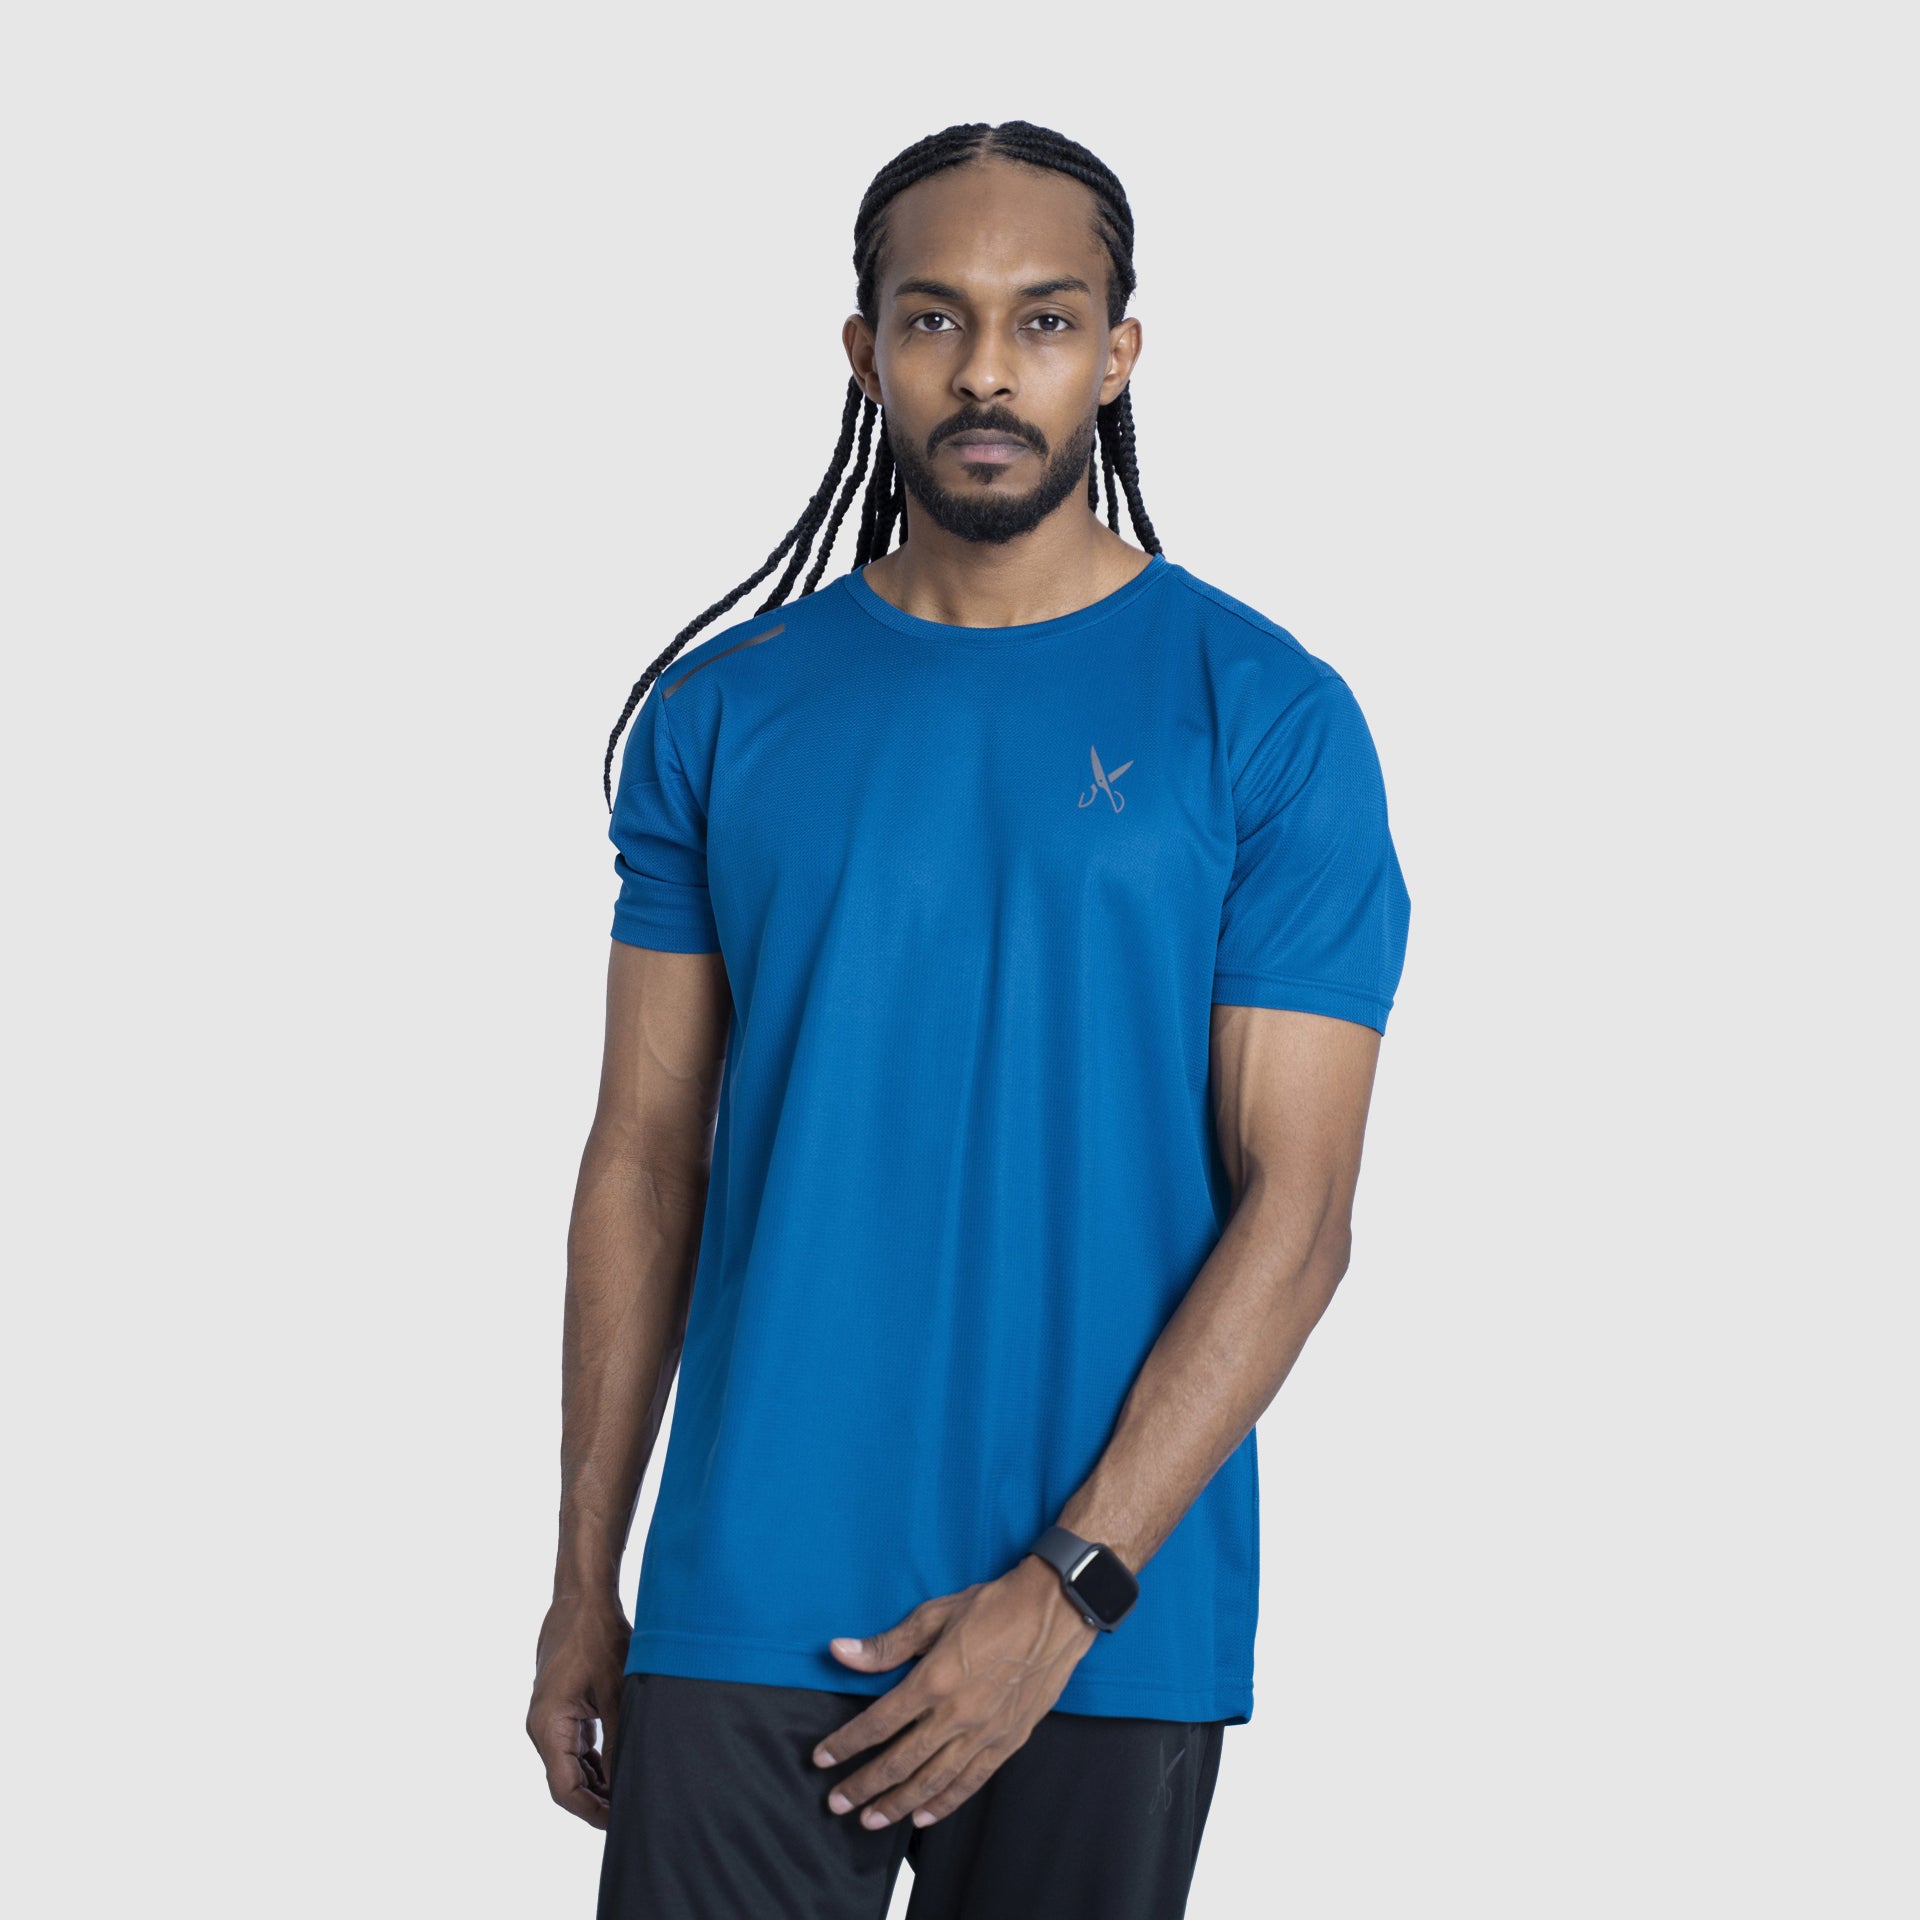 Blue Sports T-shirt From Weaver Design